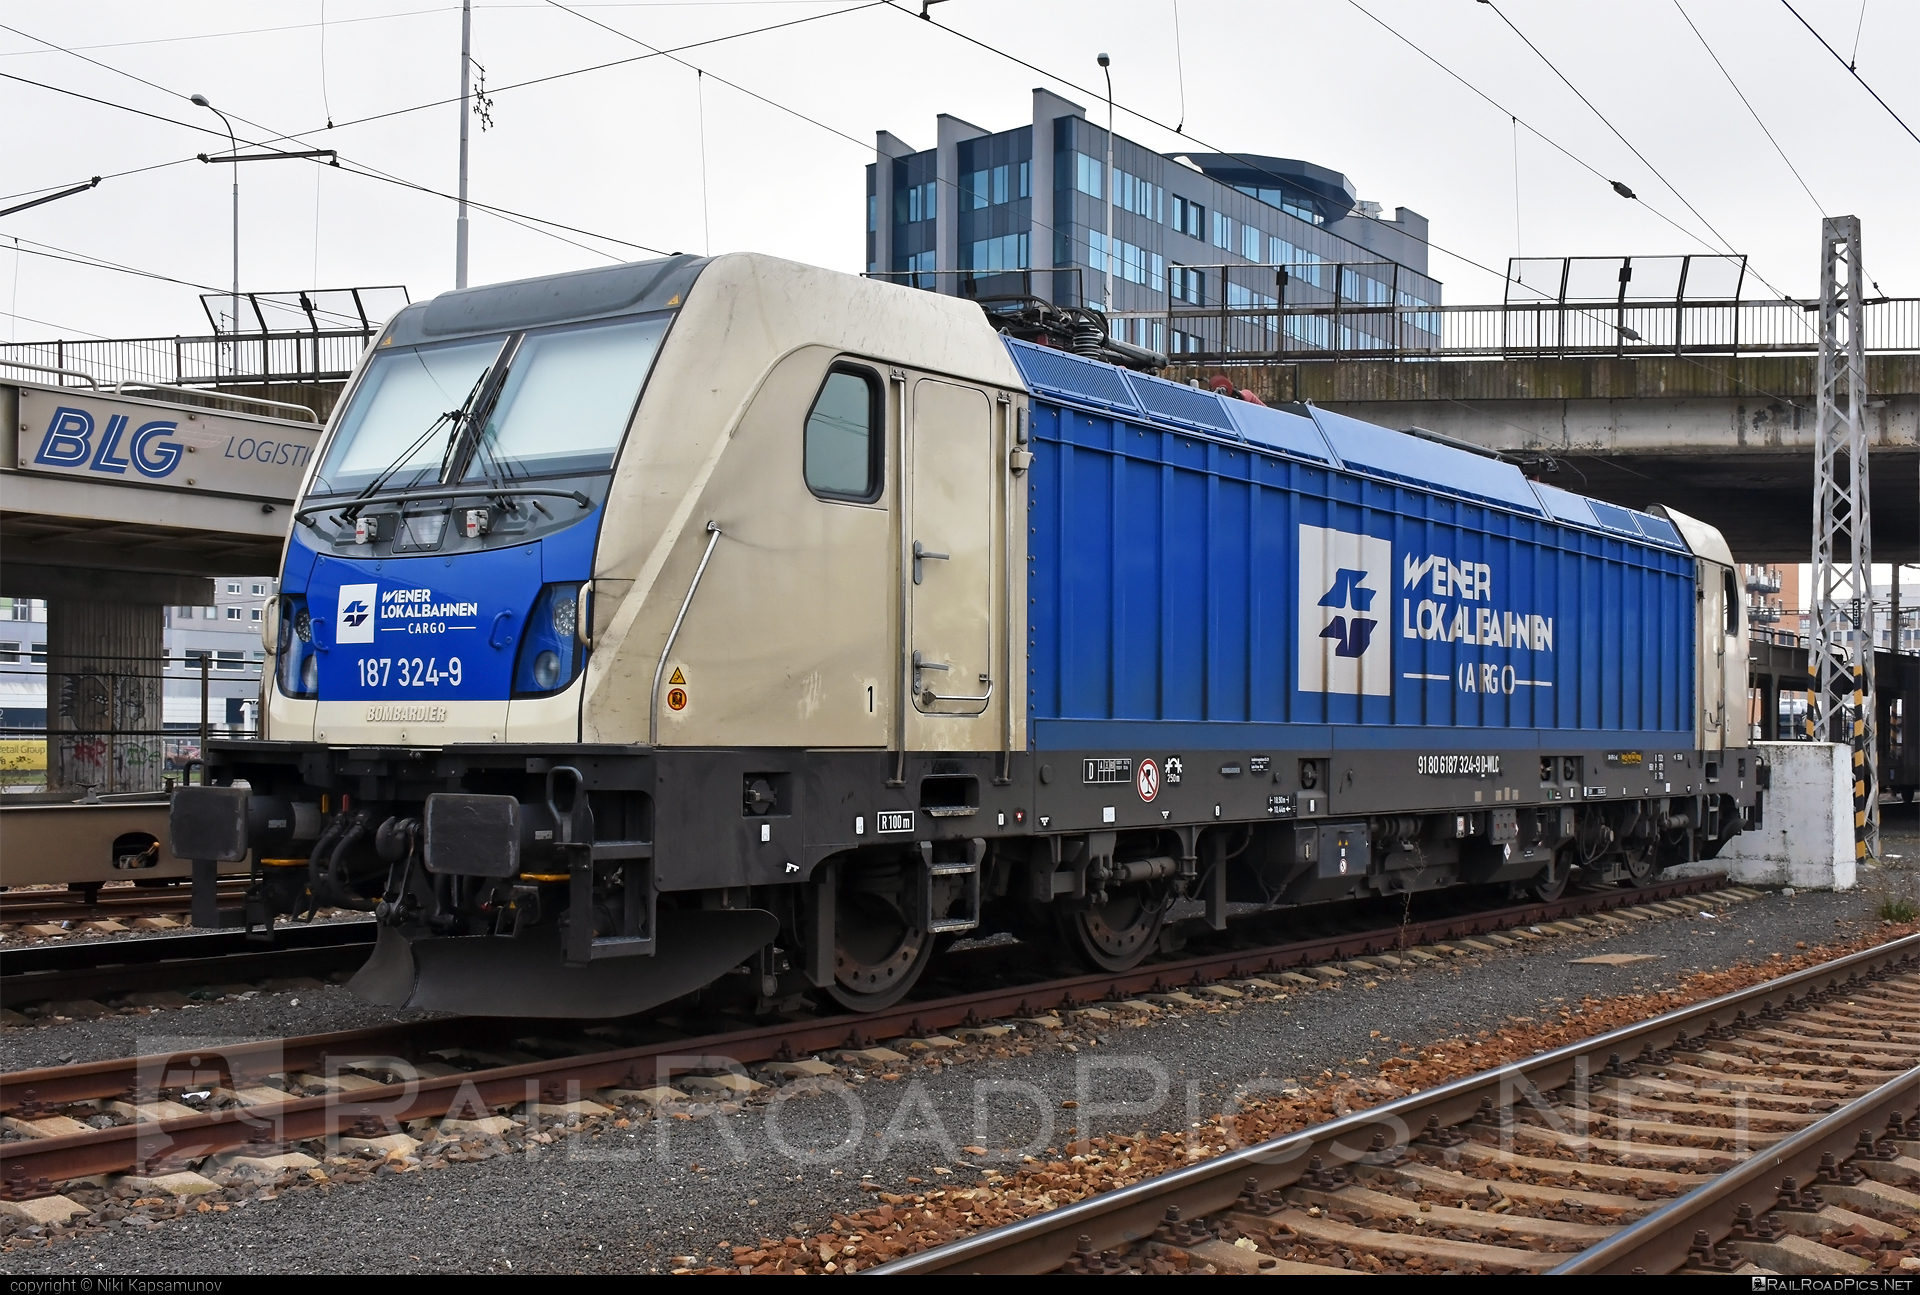 Bombardier TRAXX F160 AC3 - 187 324-9 operated by Salzburger Eisenbahn Transportlogistik GmbH #SalzburgerEisenbahnTransportlogistik #SalzburgerEisenbahnTransportlogistikGmbH #bombardier #bombardiertraxx #setg #traxx #traxxf160 #traxxf160ac #traxxf160ac3 #wienerlokalbahnencargo #wienerlokalbahnencargogmbh #wlc